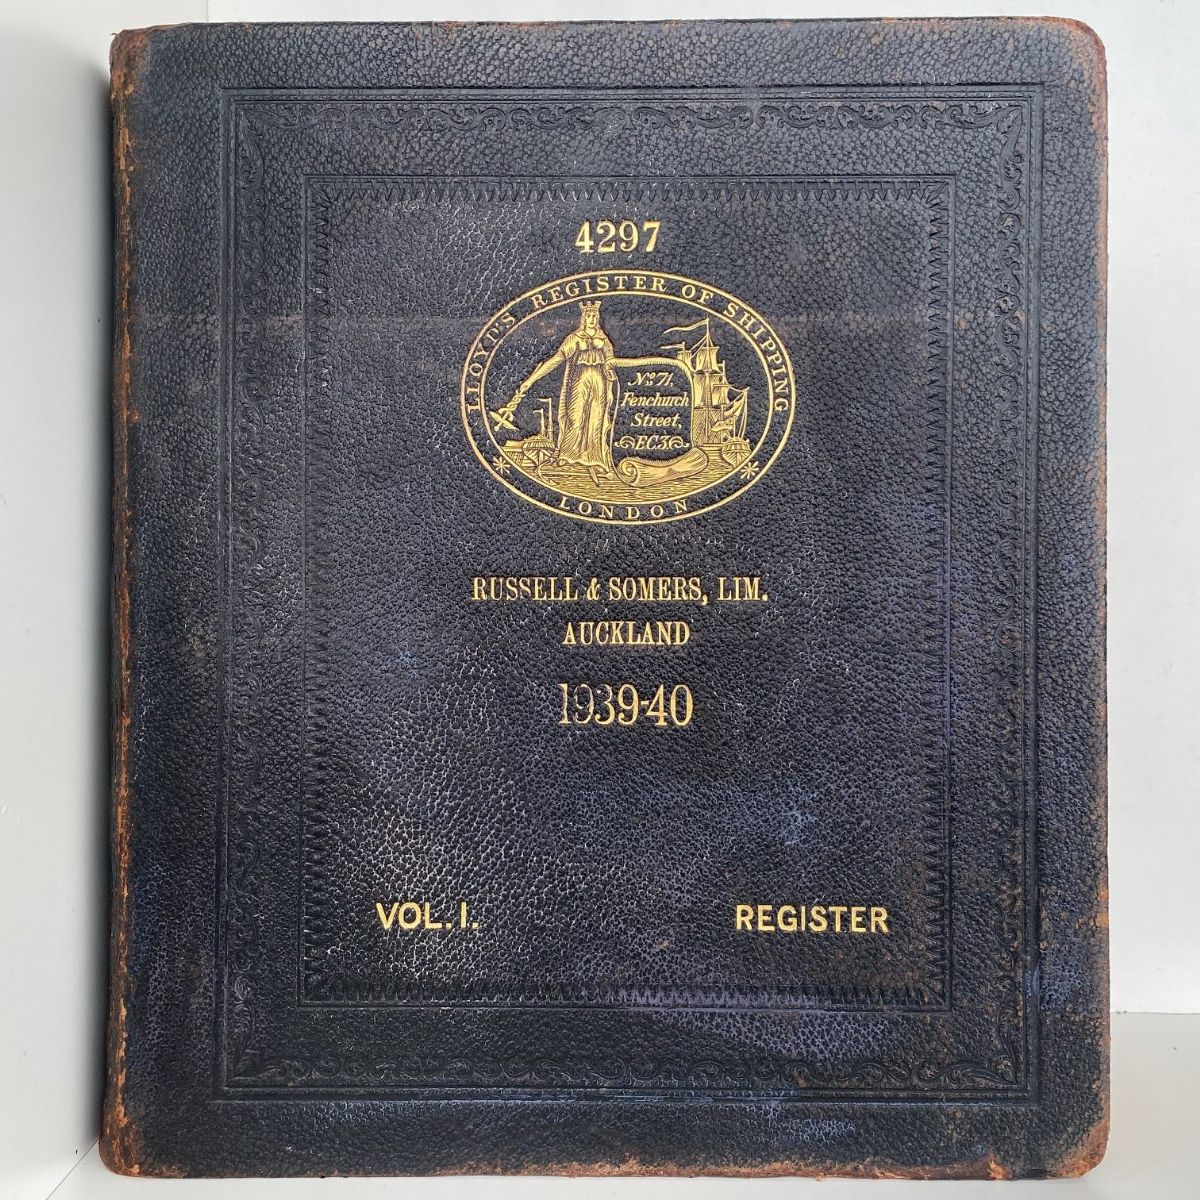 LLYOD'S REGISTER OF SHIPPING 1939 - 1940, Volume 1, Register - 4297